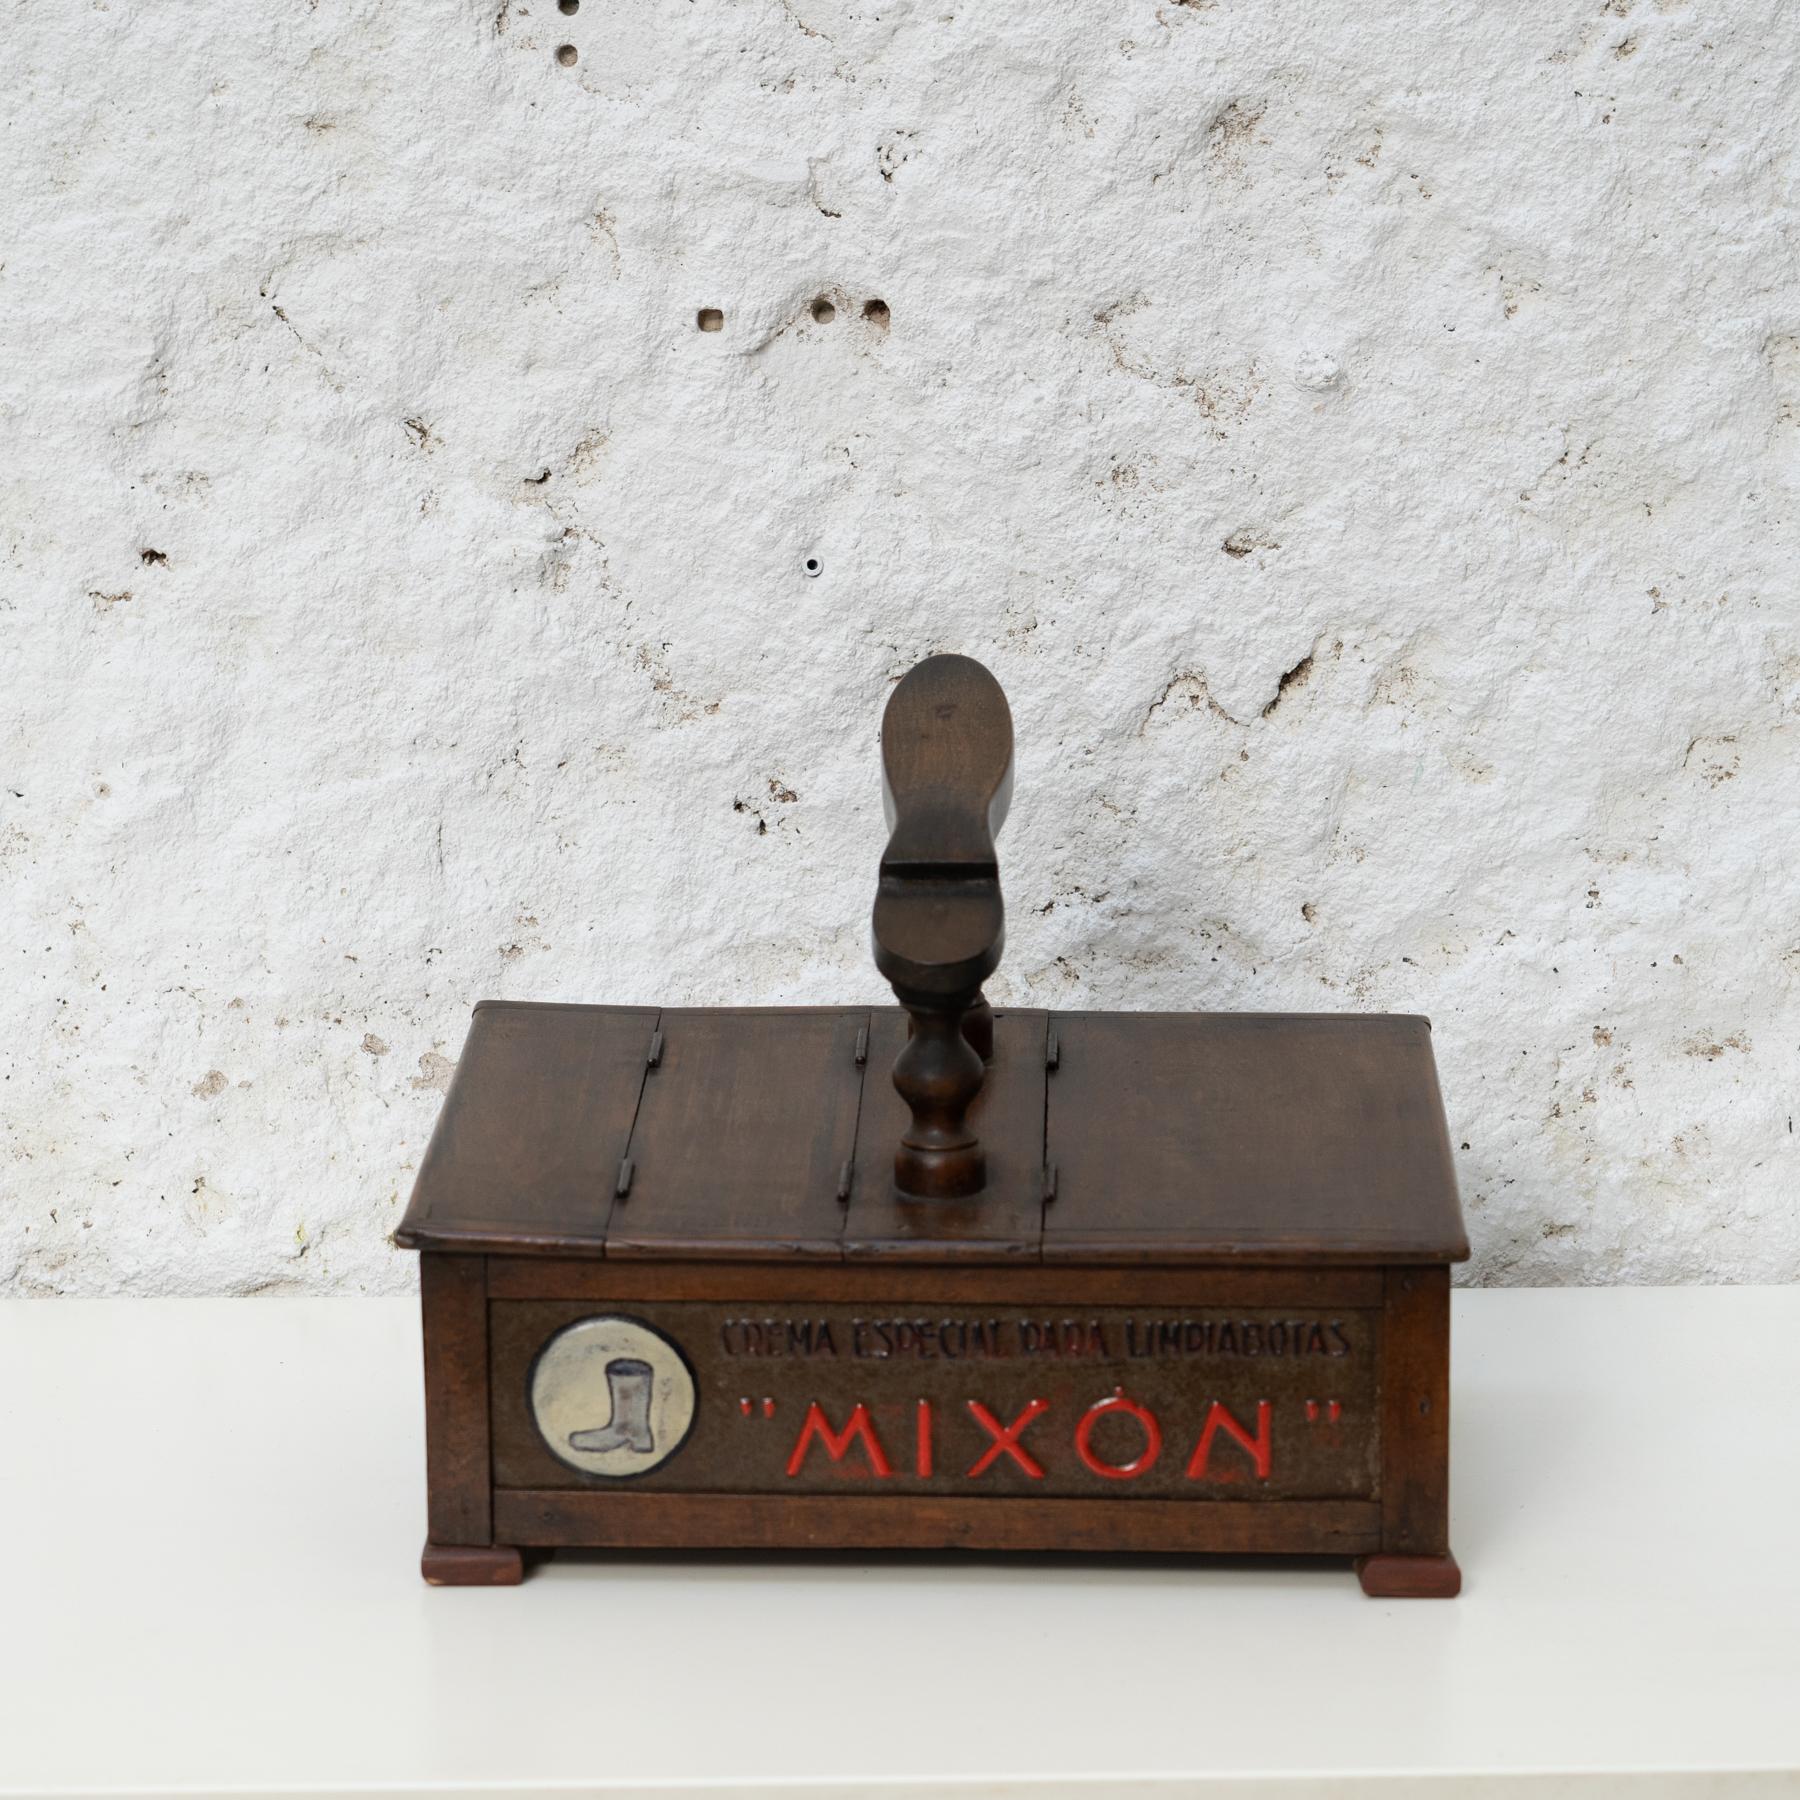 Mid-Century Modern Nostalgic Craft: Hand-Painted Shoeshiner Box, Wood and Metal, c. 1930